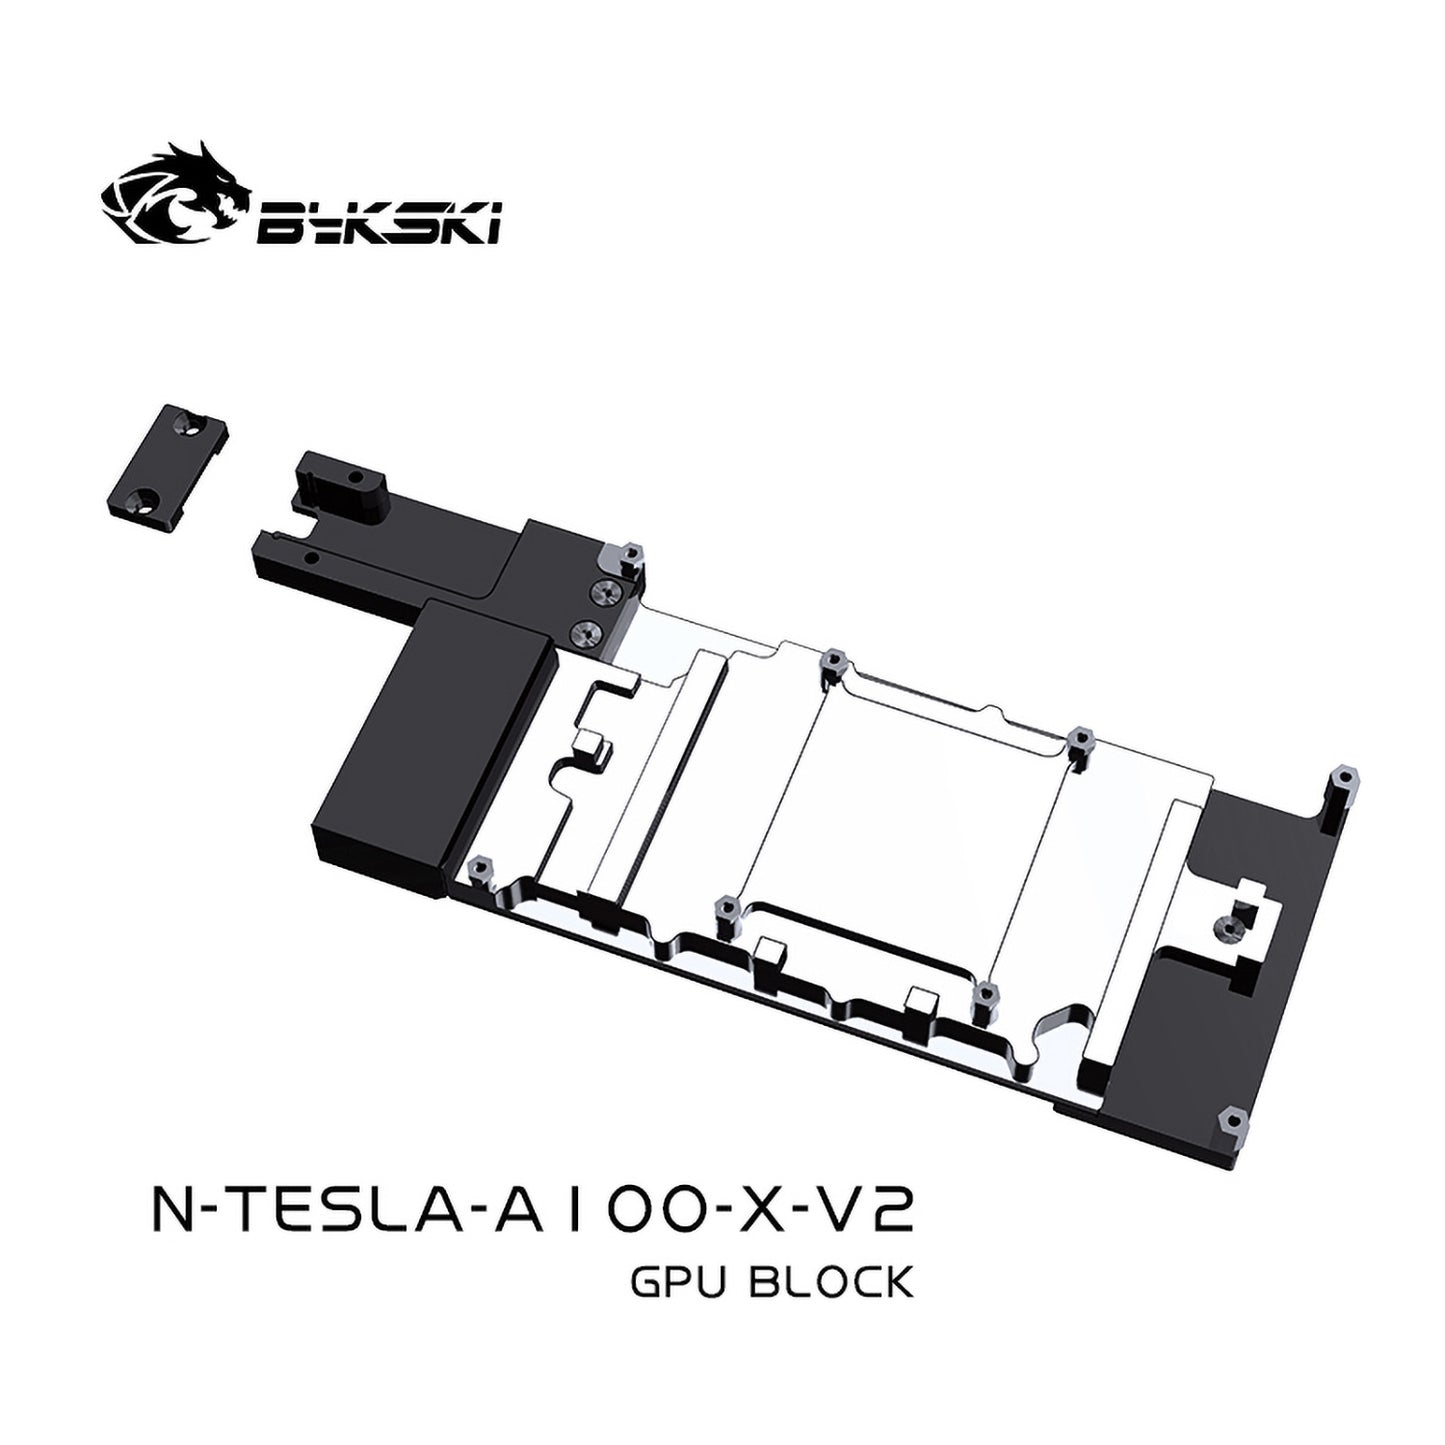 Bykski GPU Block For Nvidia Tesla A100 40GB / Nvidia CMP 170HX, High Heat Resistance Material POM + Full Metal Construction, With Backplate Full Cover GPU Water Cooling Cooler Radiator Block N-TESLA-A100-X-V2